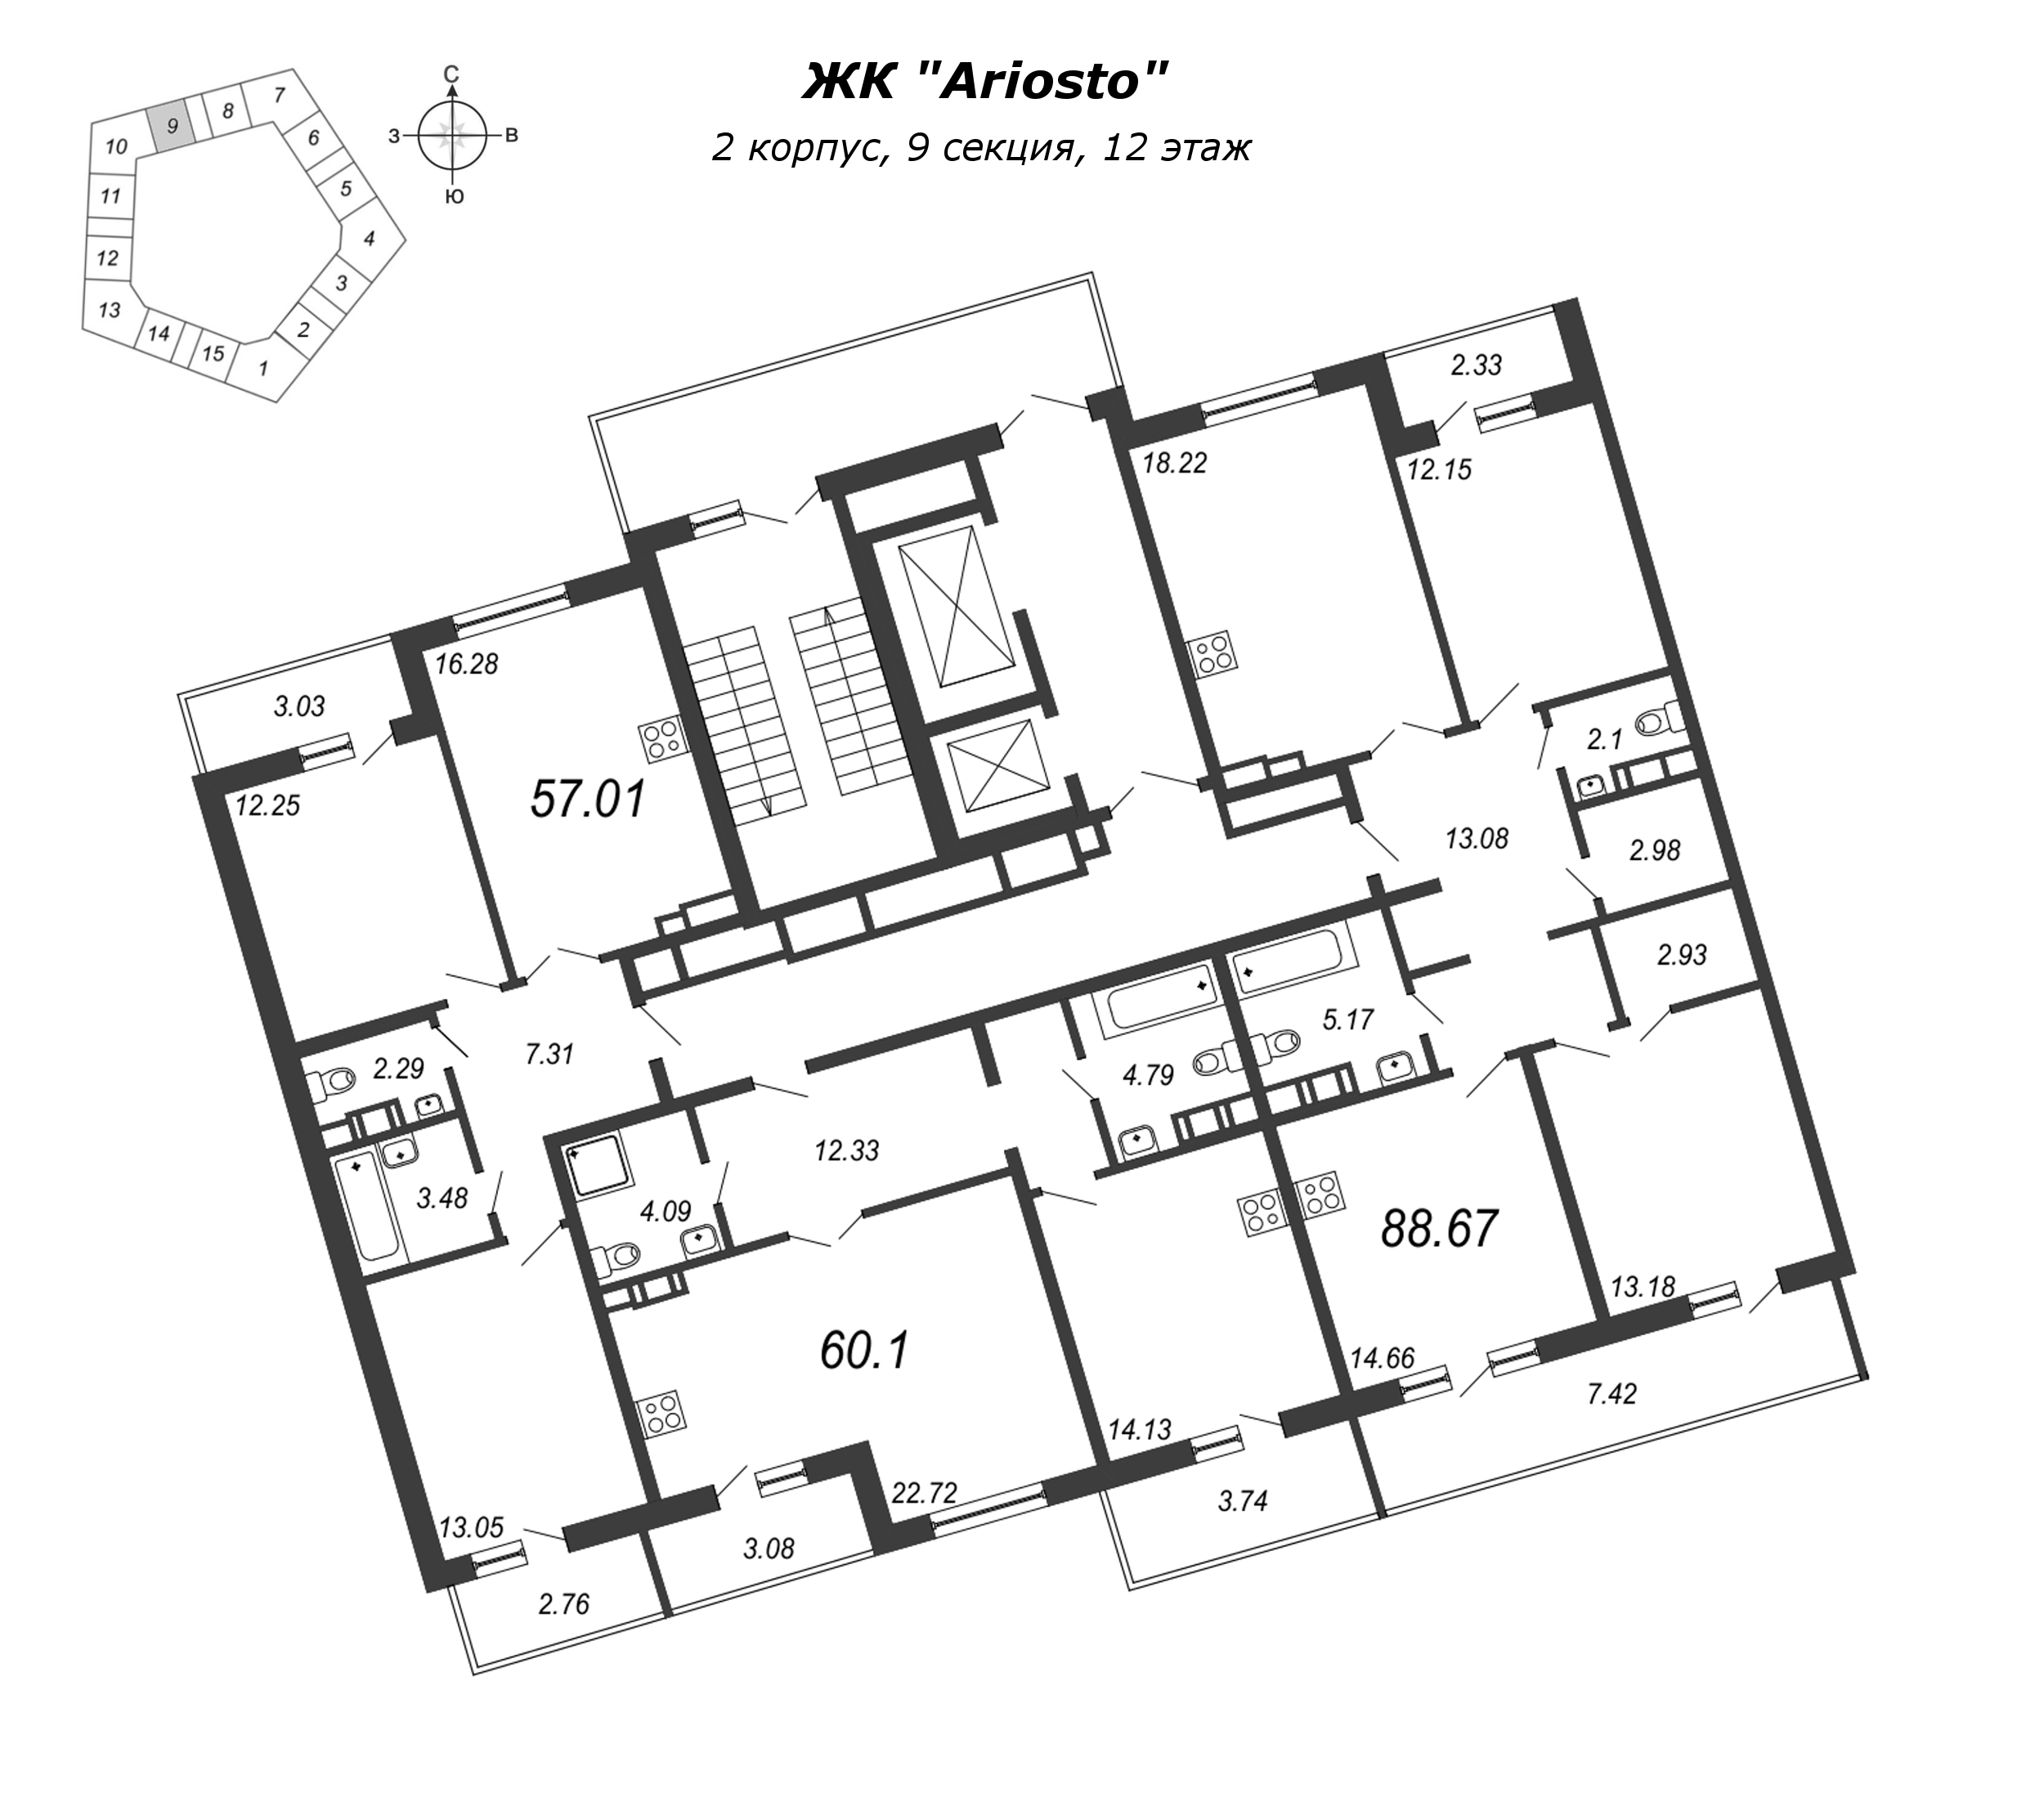 2-комнатная (Евро) квартира, 60.1 м² - планировка этажа